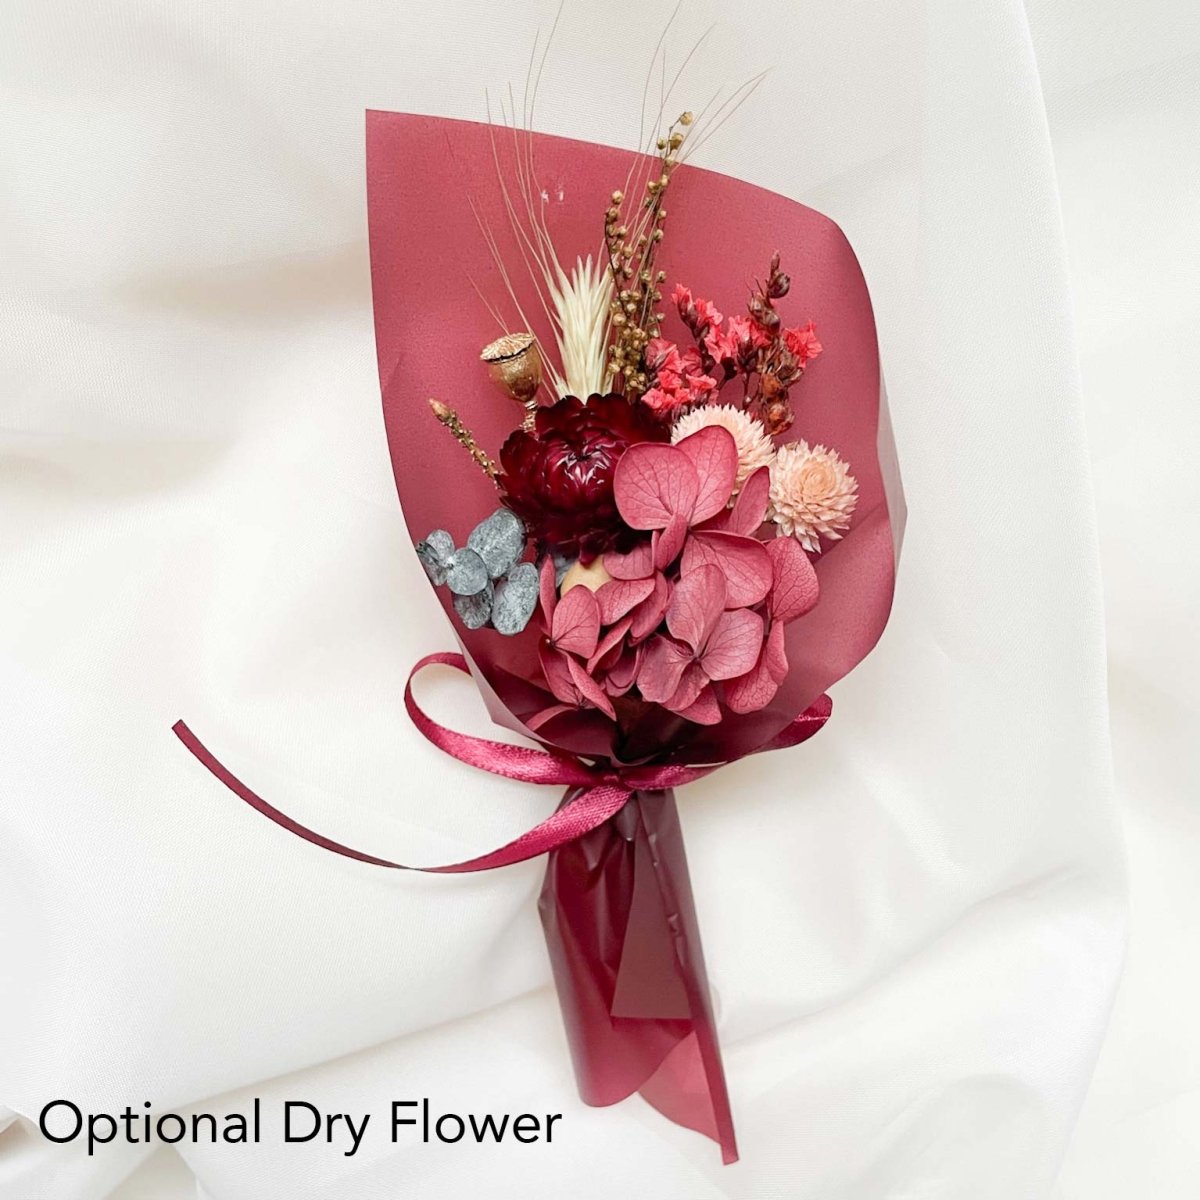 KADOO optional dry flower bouquet